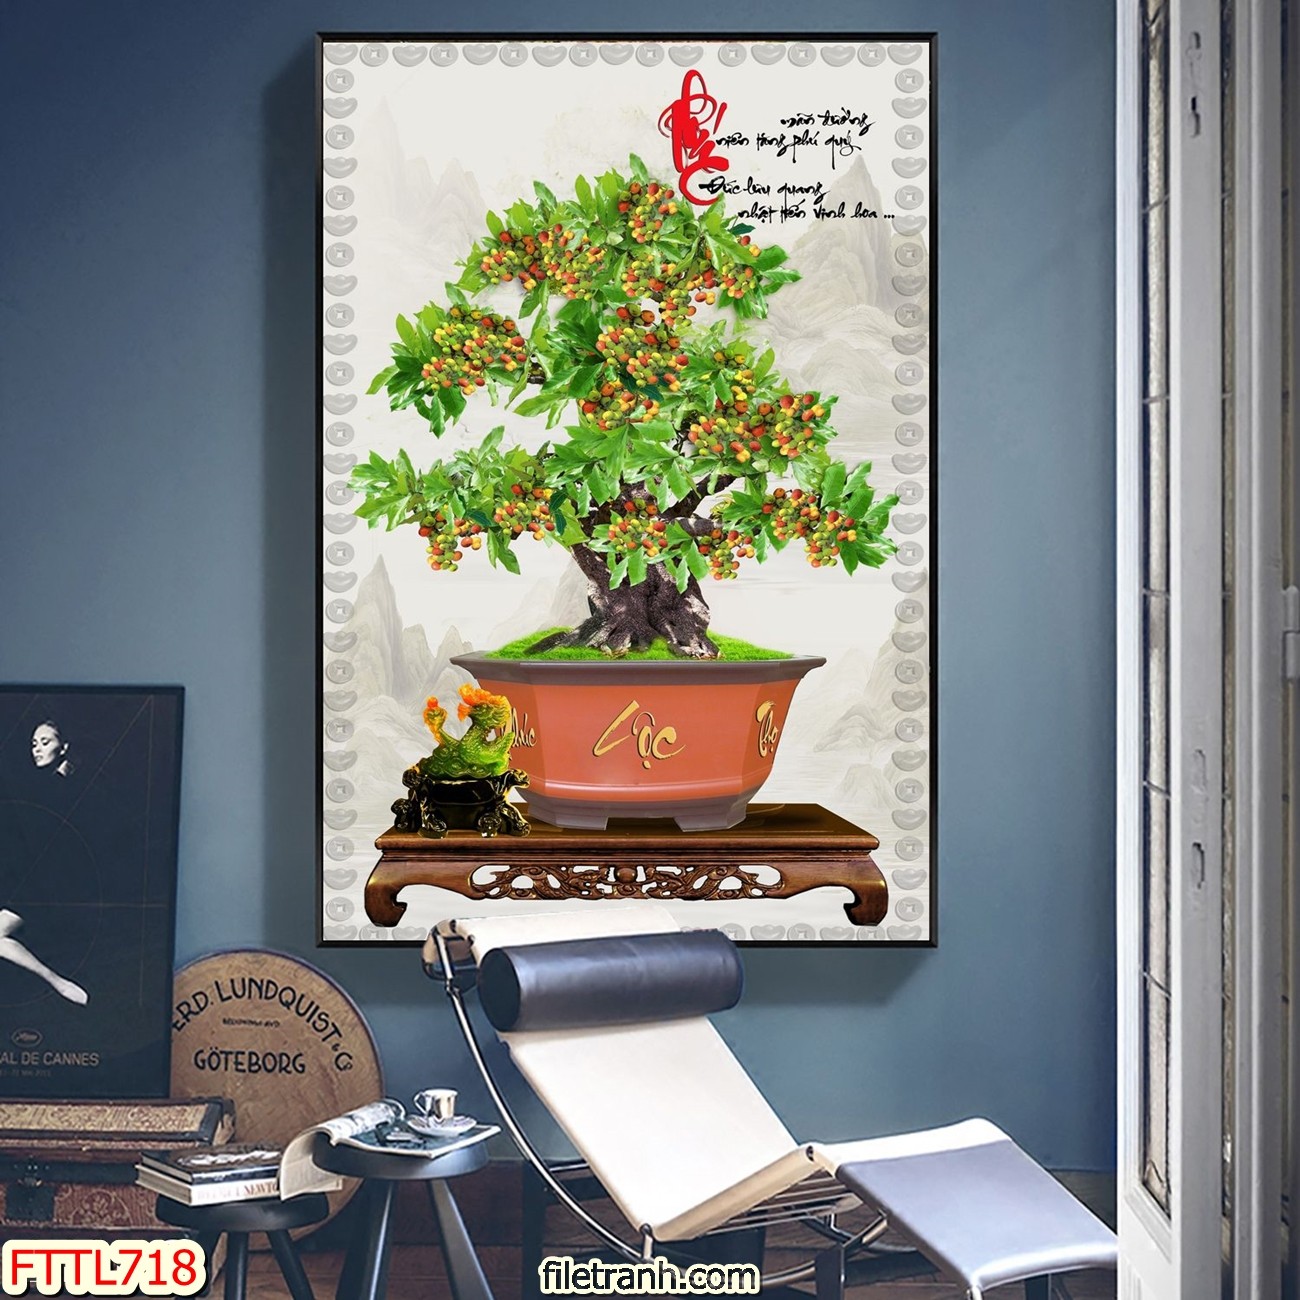 https://filetranh.com/file-tranh-chau-mai-bonsai/file-tranh-chau-mai-bonsai-fttl718.html